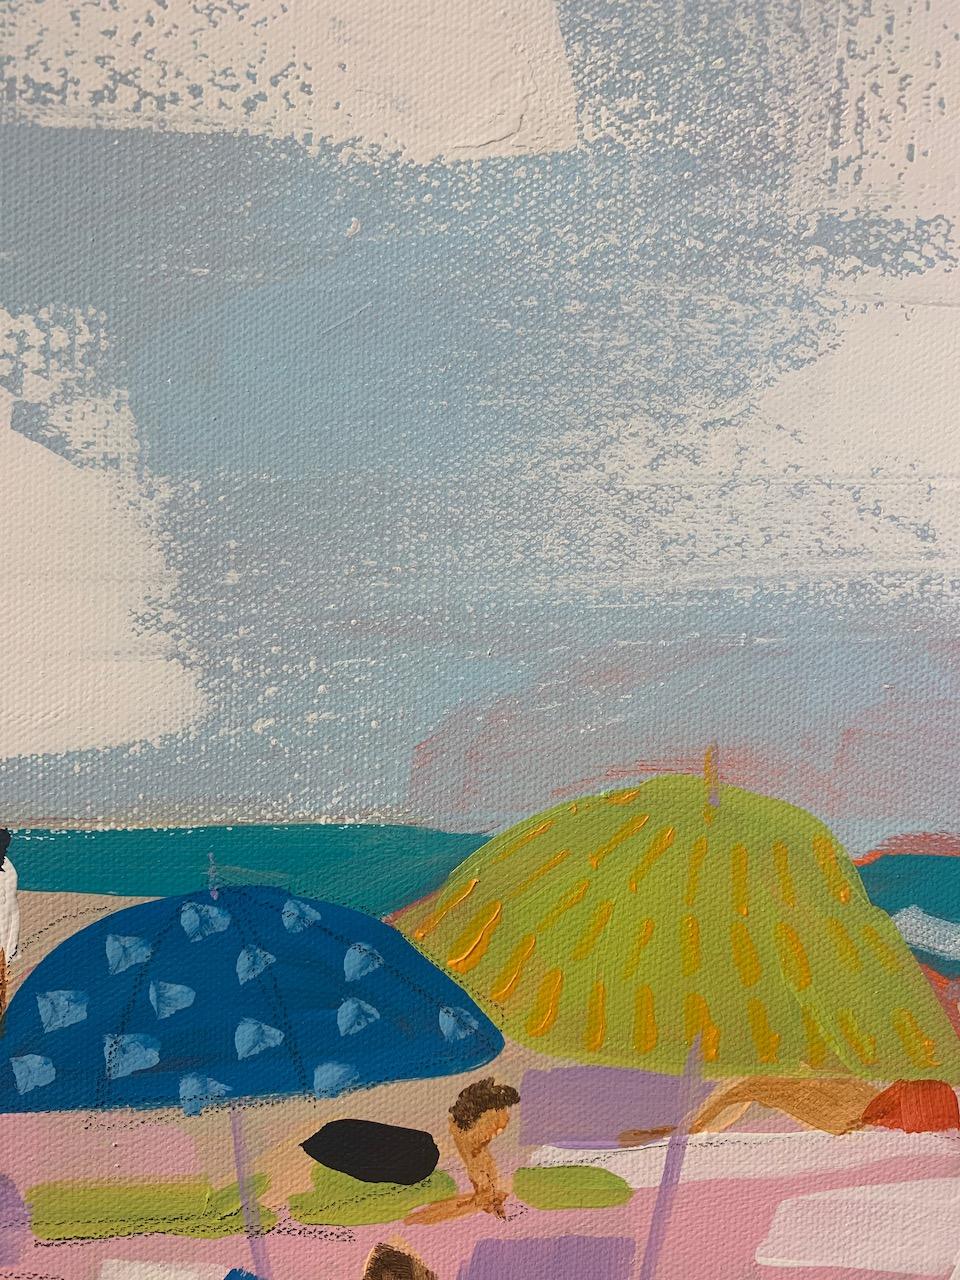 painting beach umbrellas